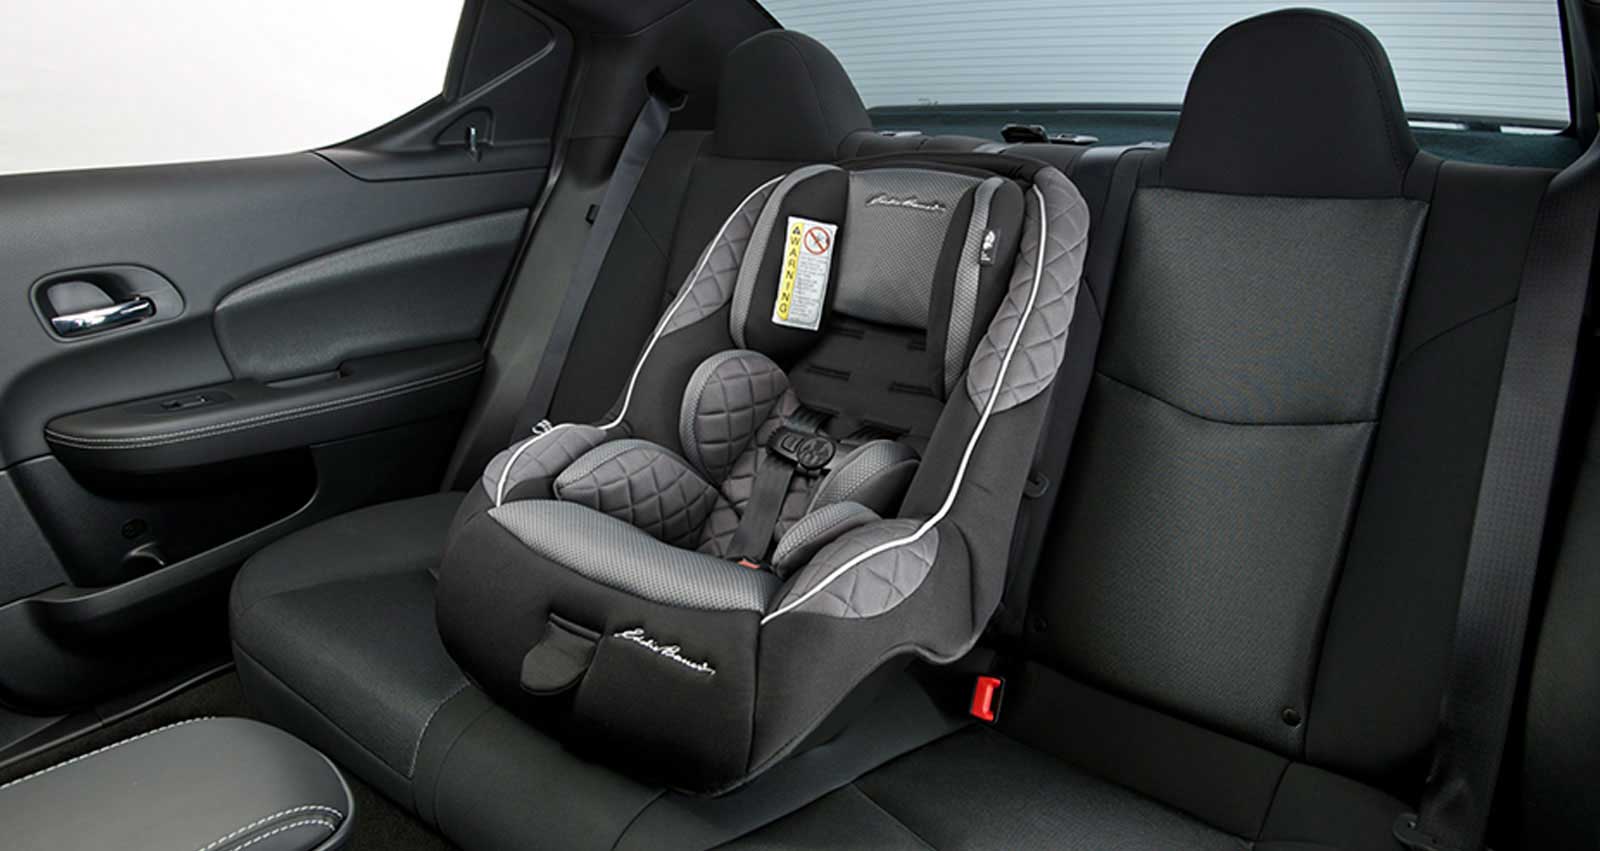 2014 Dodge Avenger SE Interior Child Protection